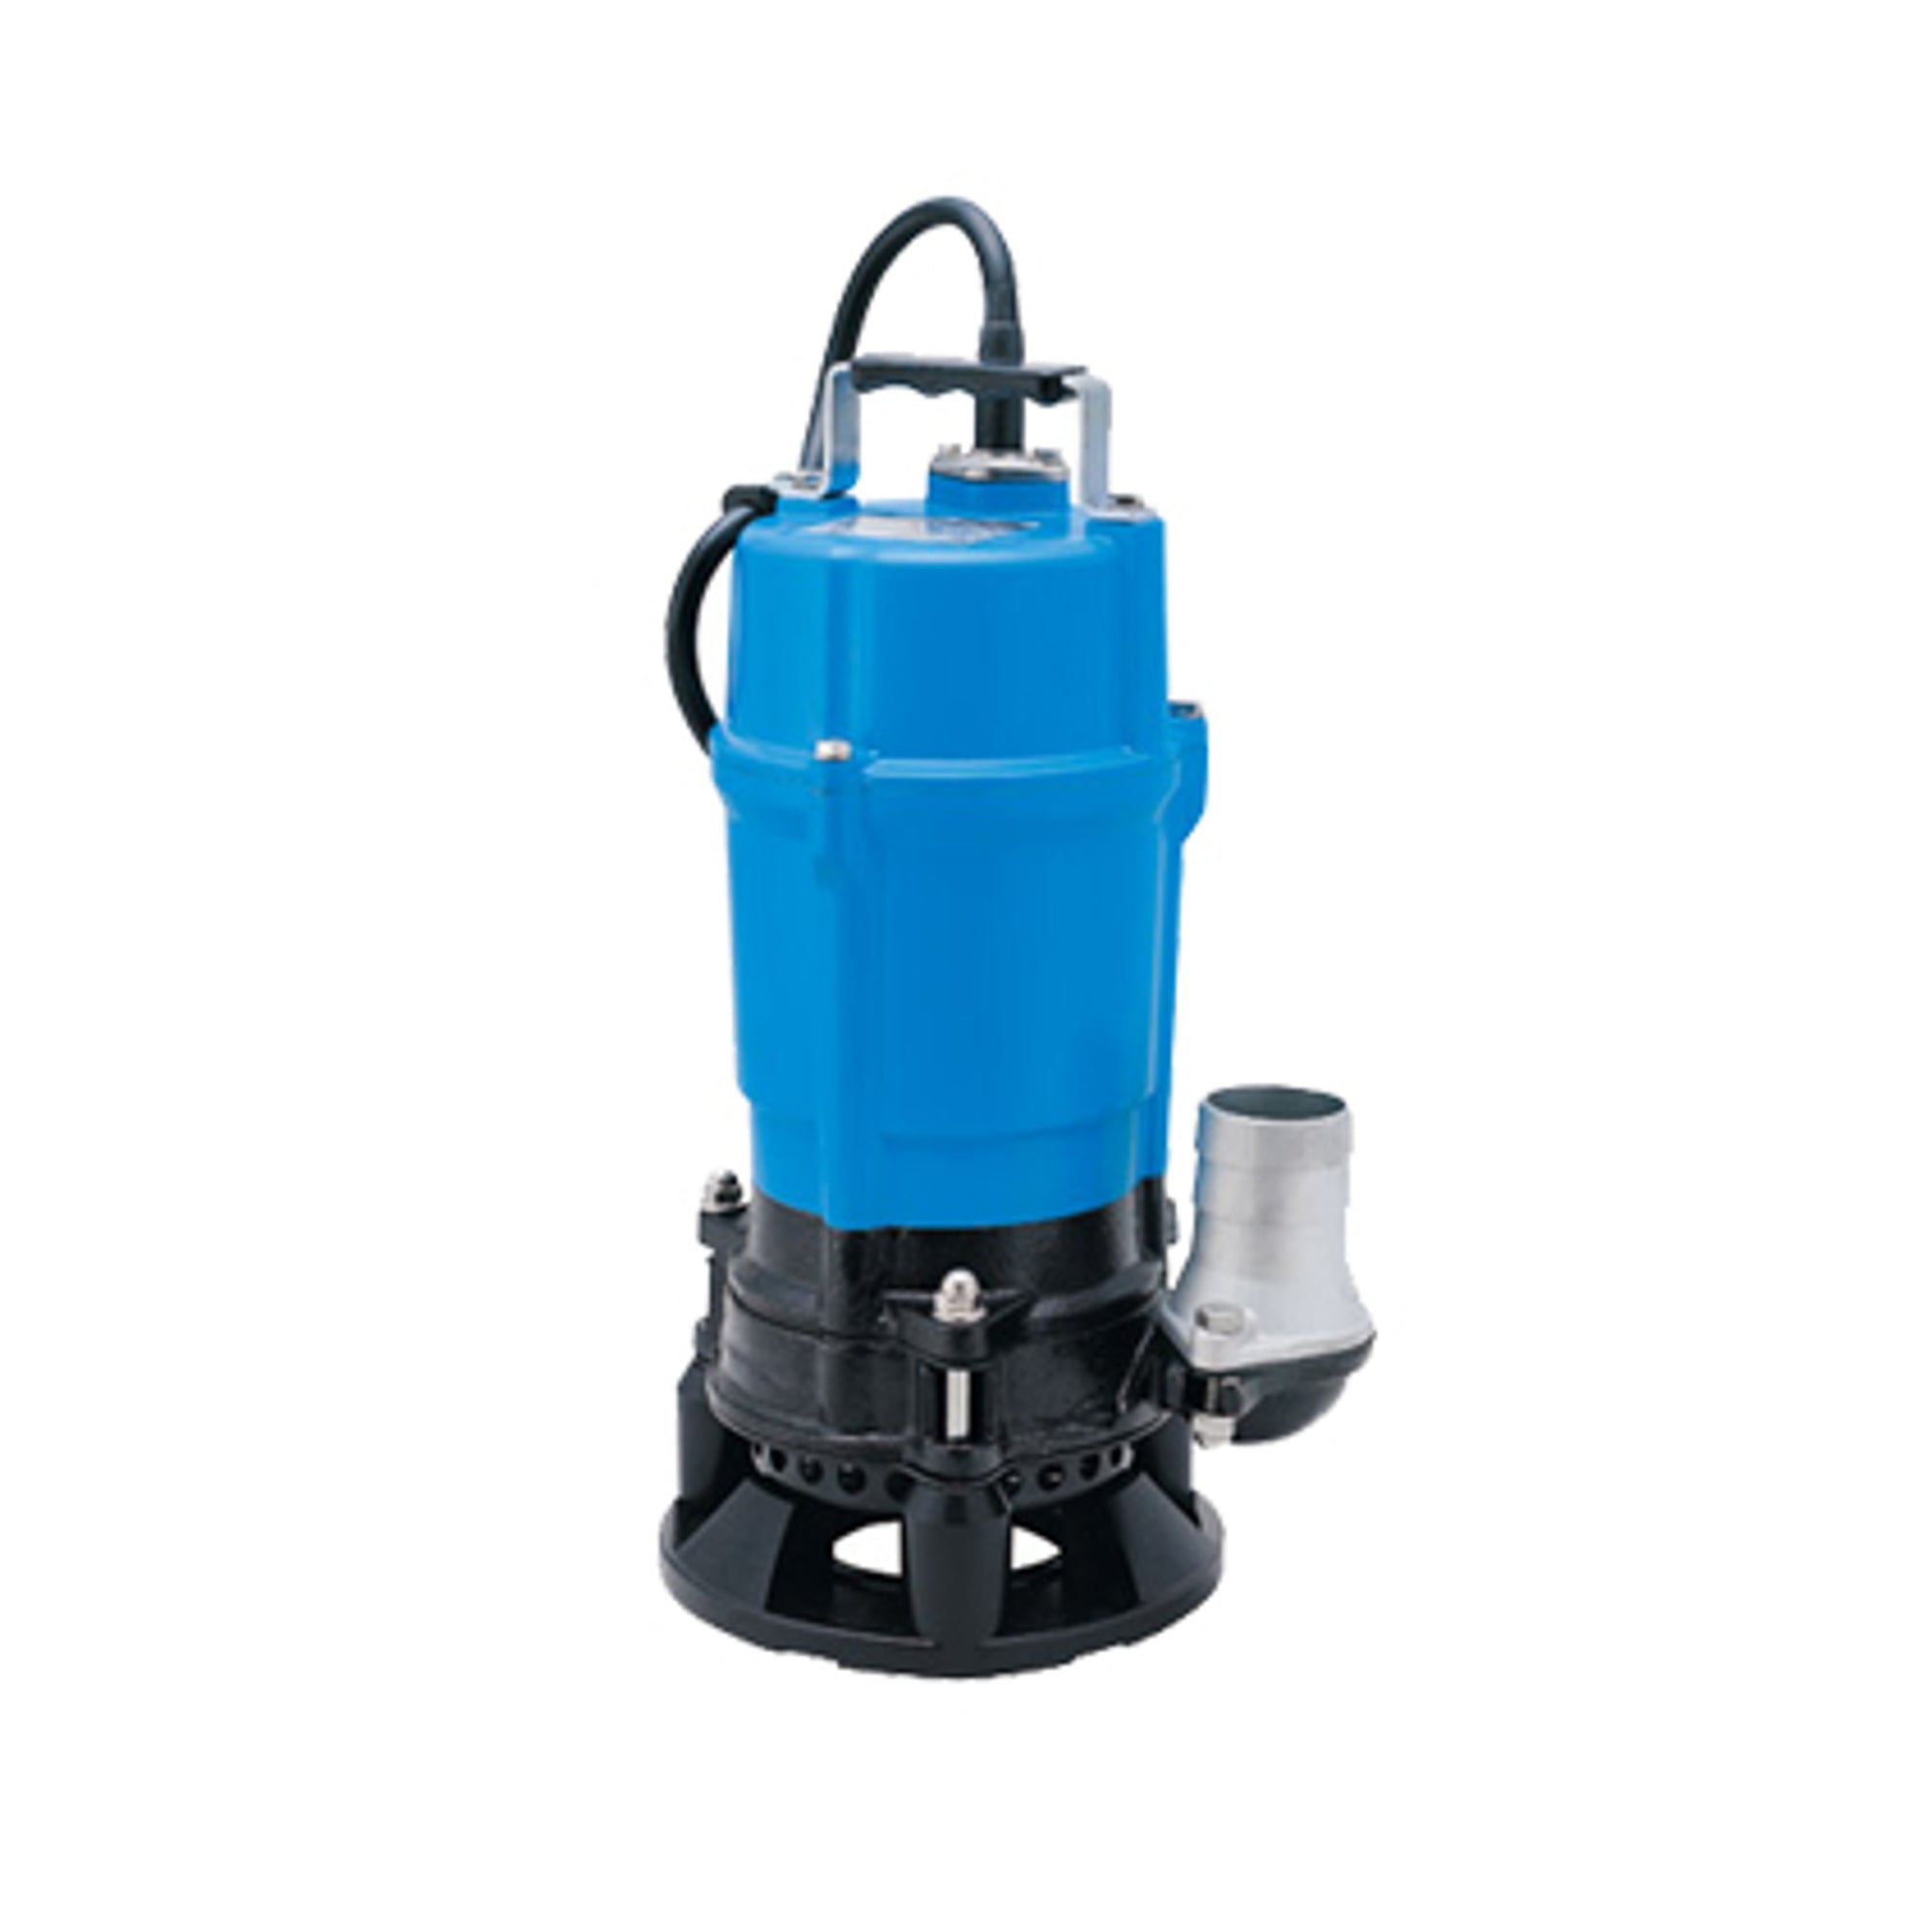 Tsurumi HS series submersible sand slurry water pump